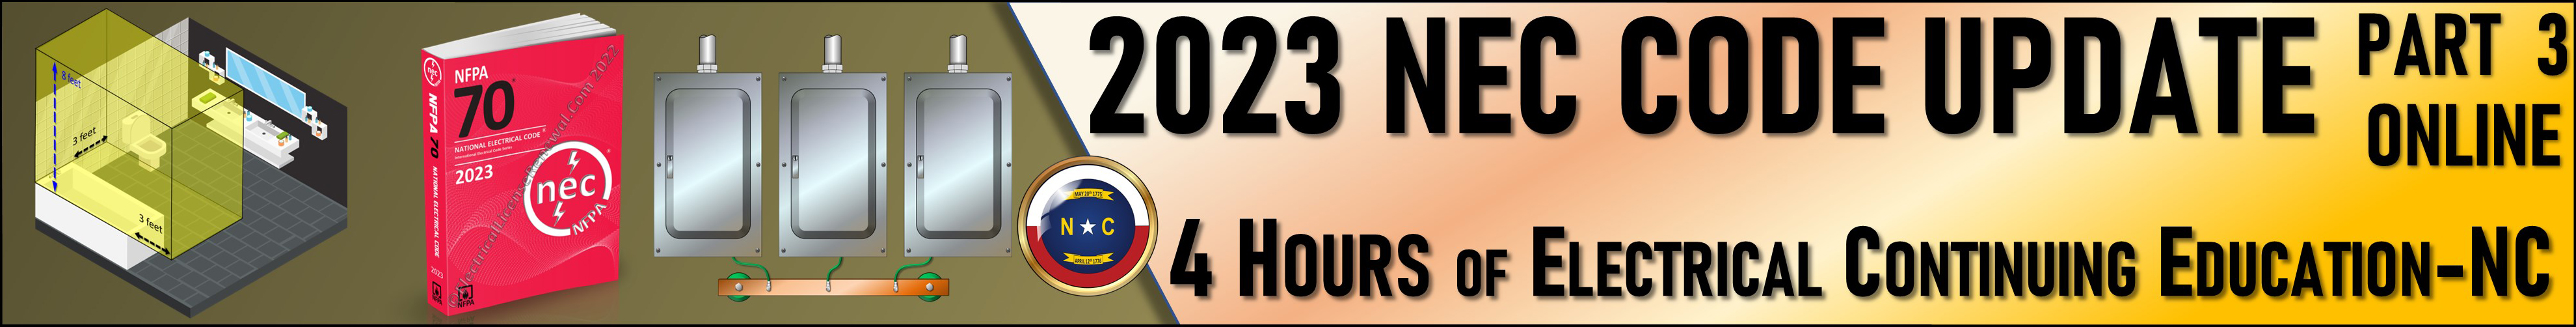 2023 NEC Code Changes Update Part 3 Banner